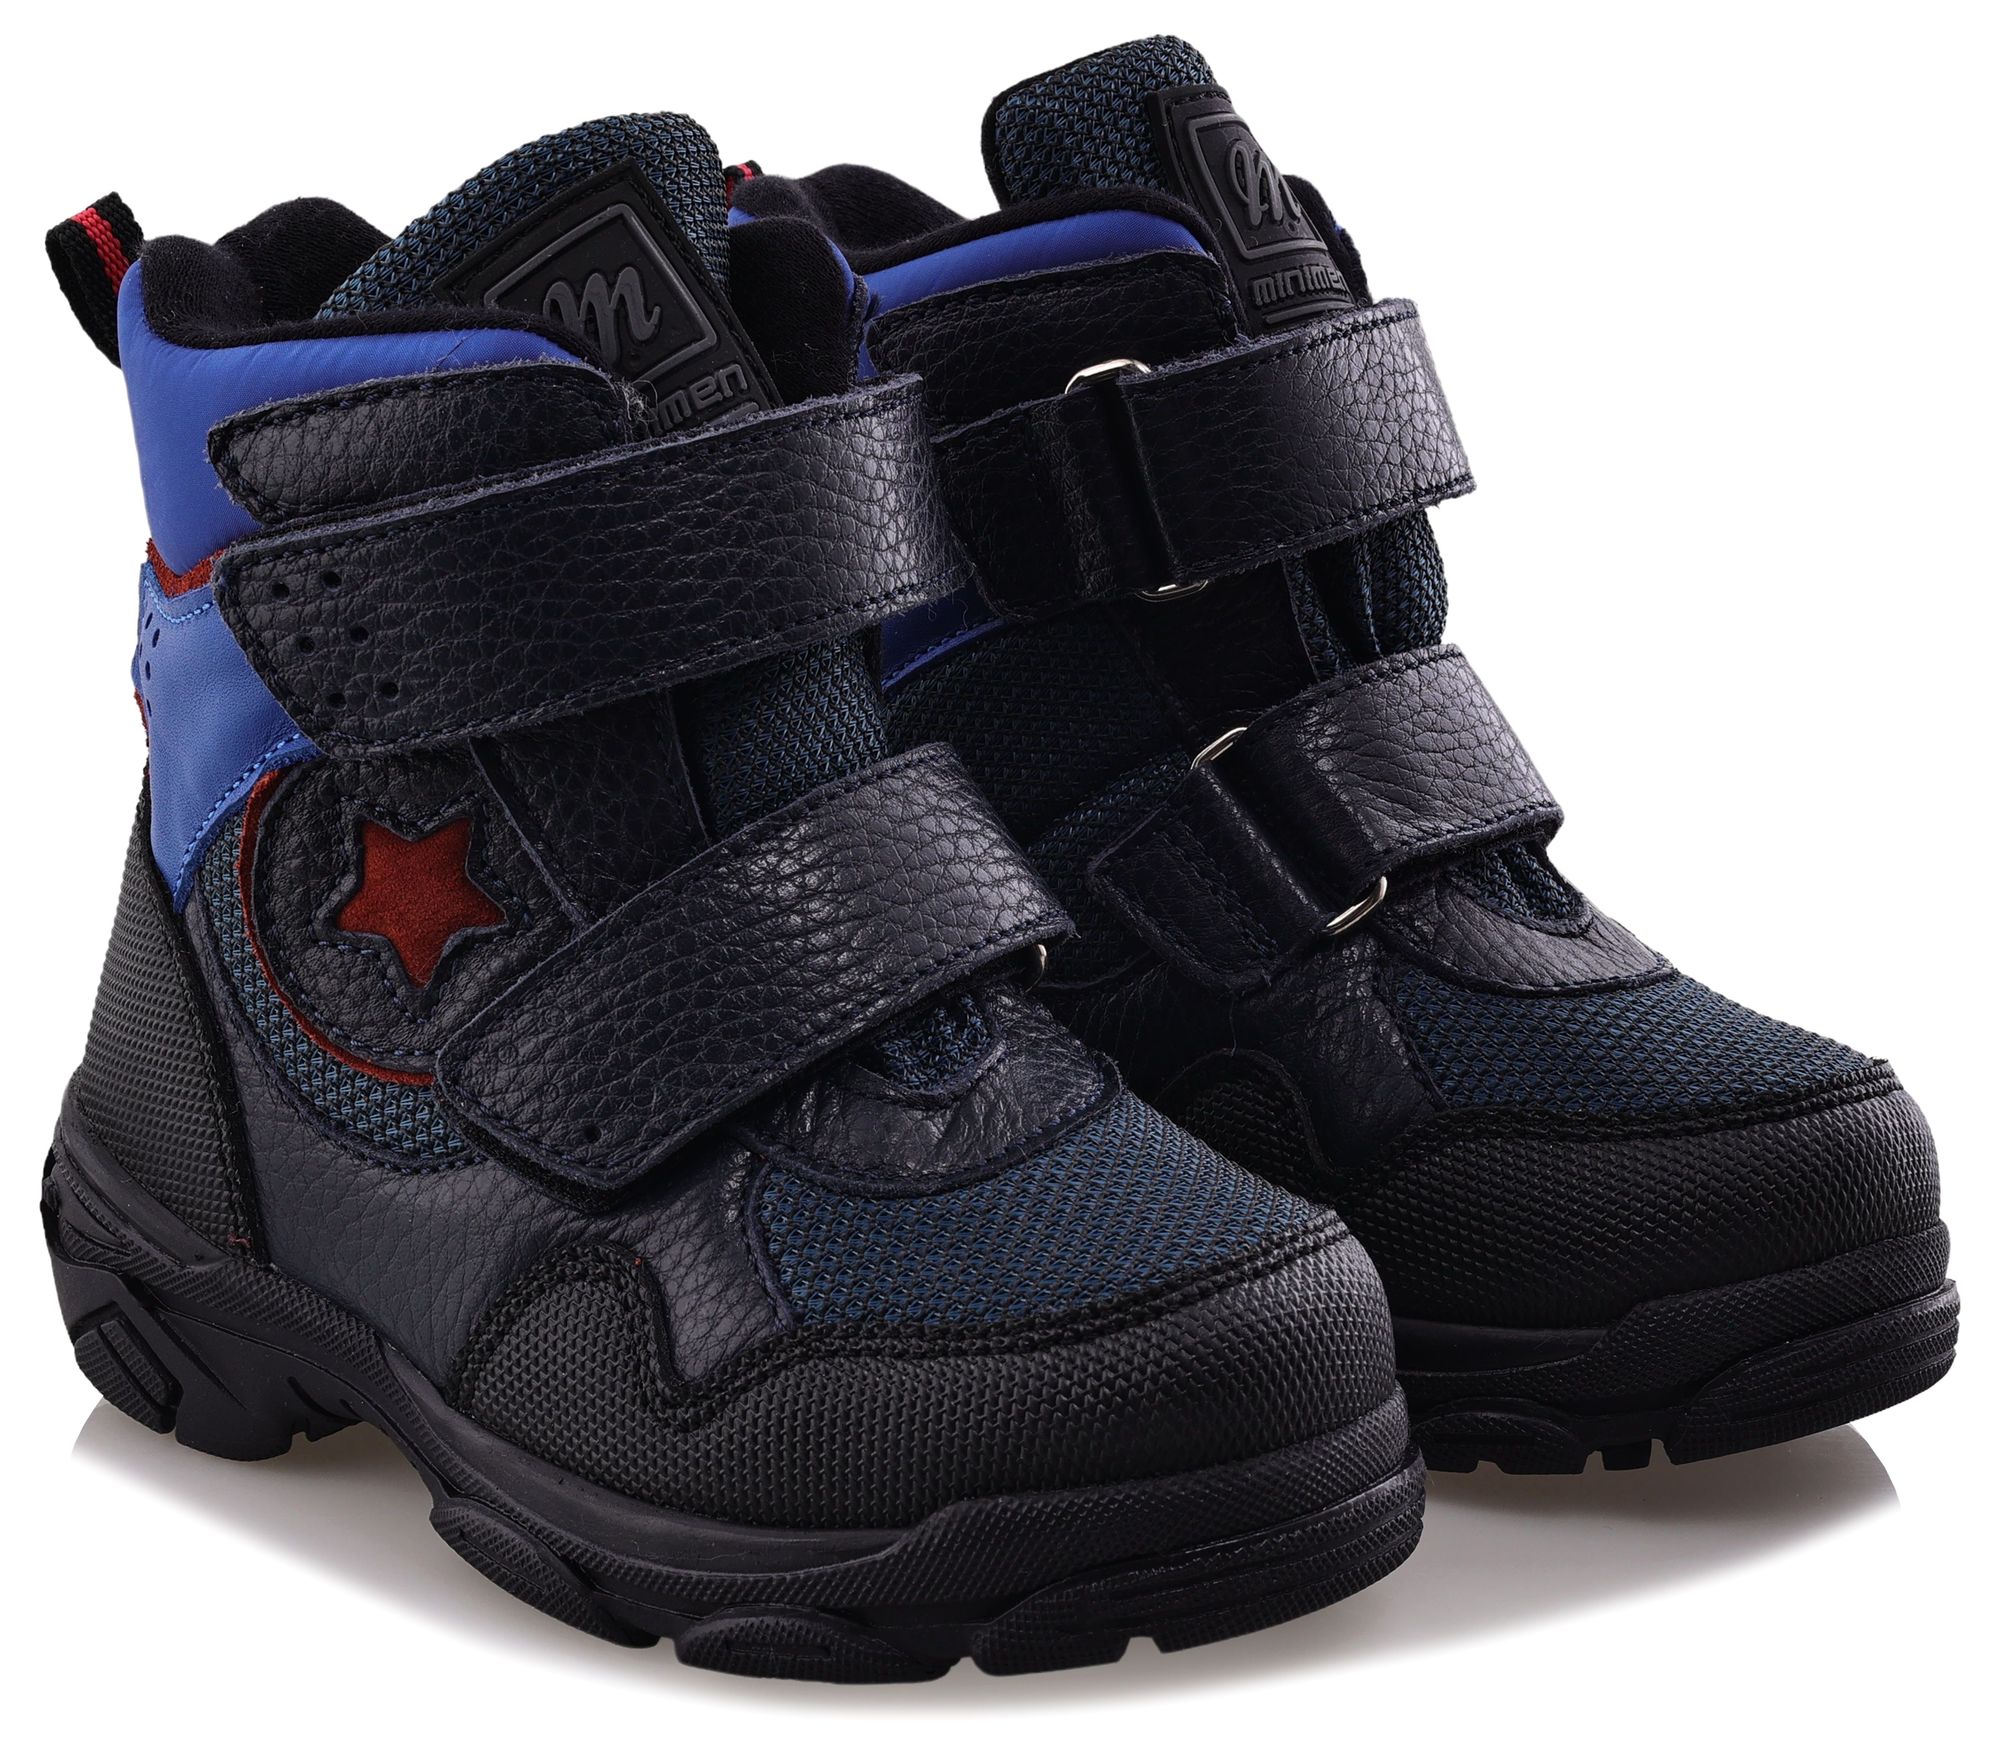 Ботинки Minimen для мальчиков, тёмно-синие, размер 27, 2658-63-23B-01 ботинки minimen для девочек сиреневые размер 27 2658 63 23b 04